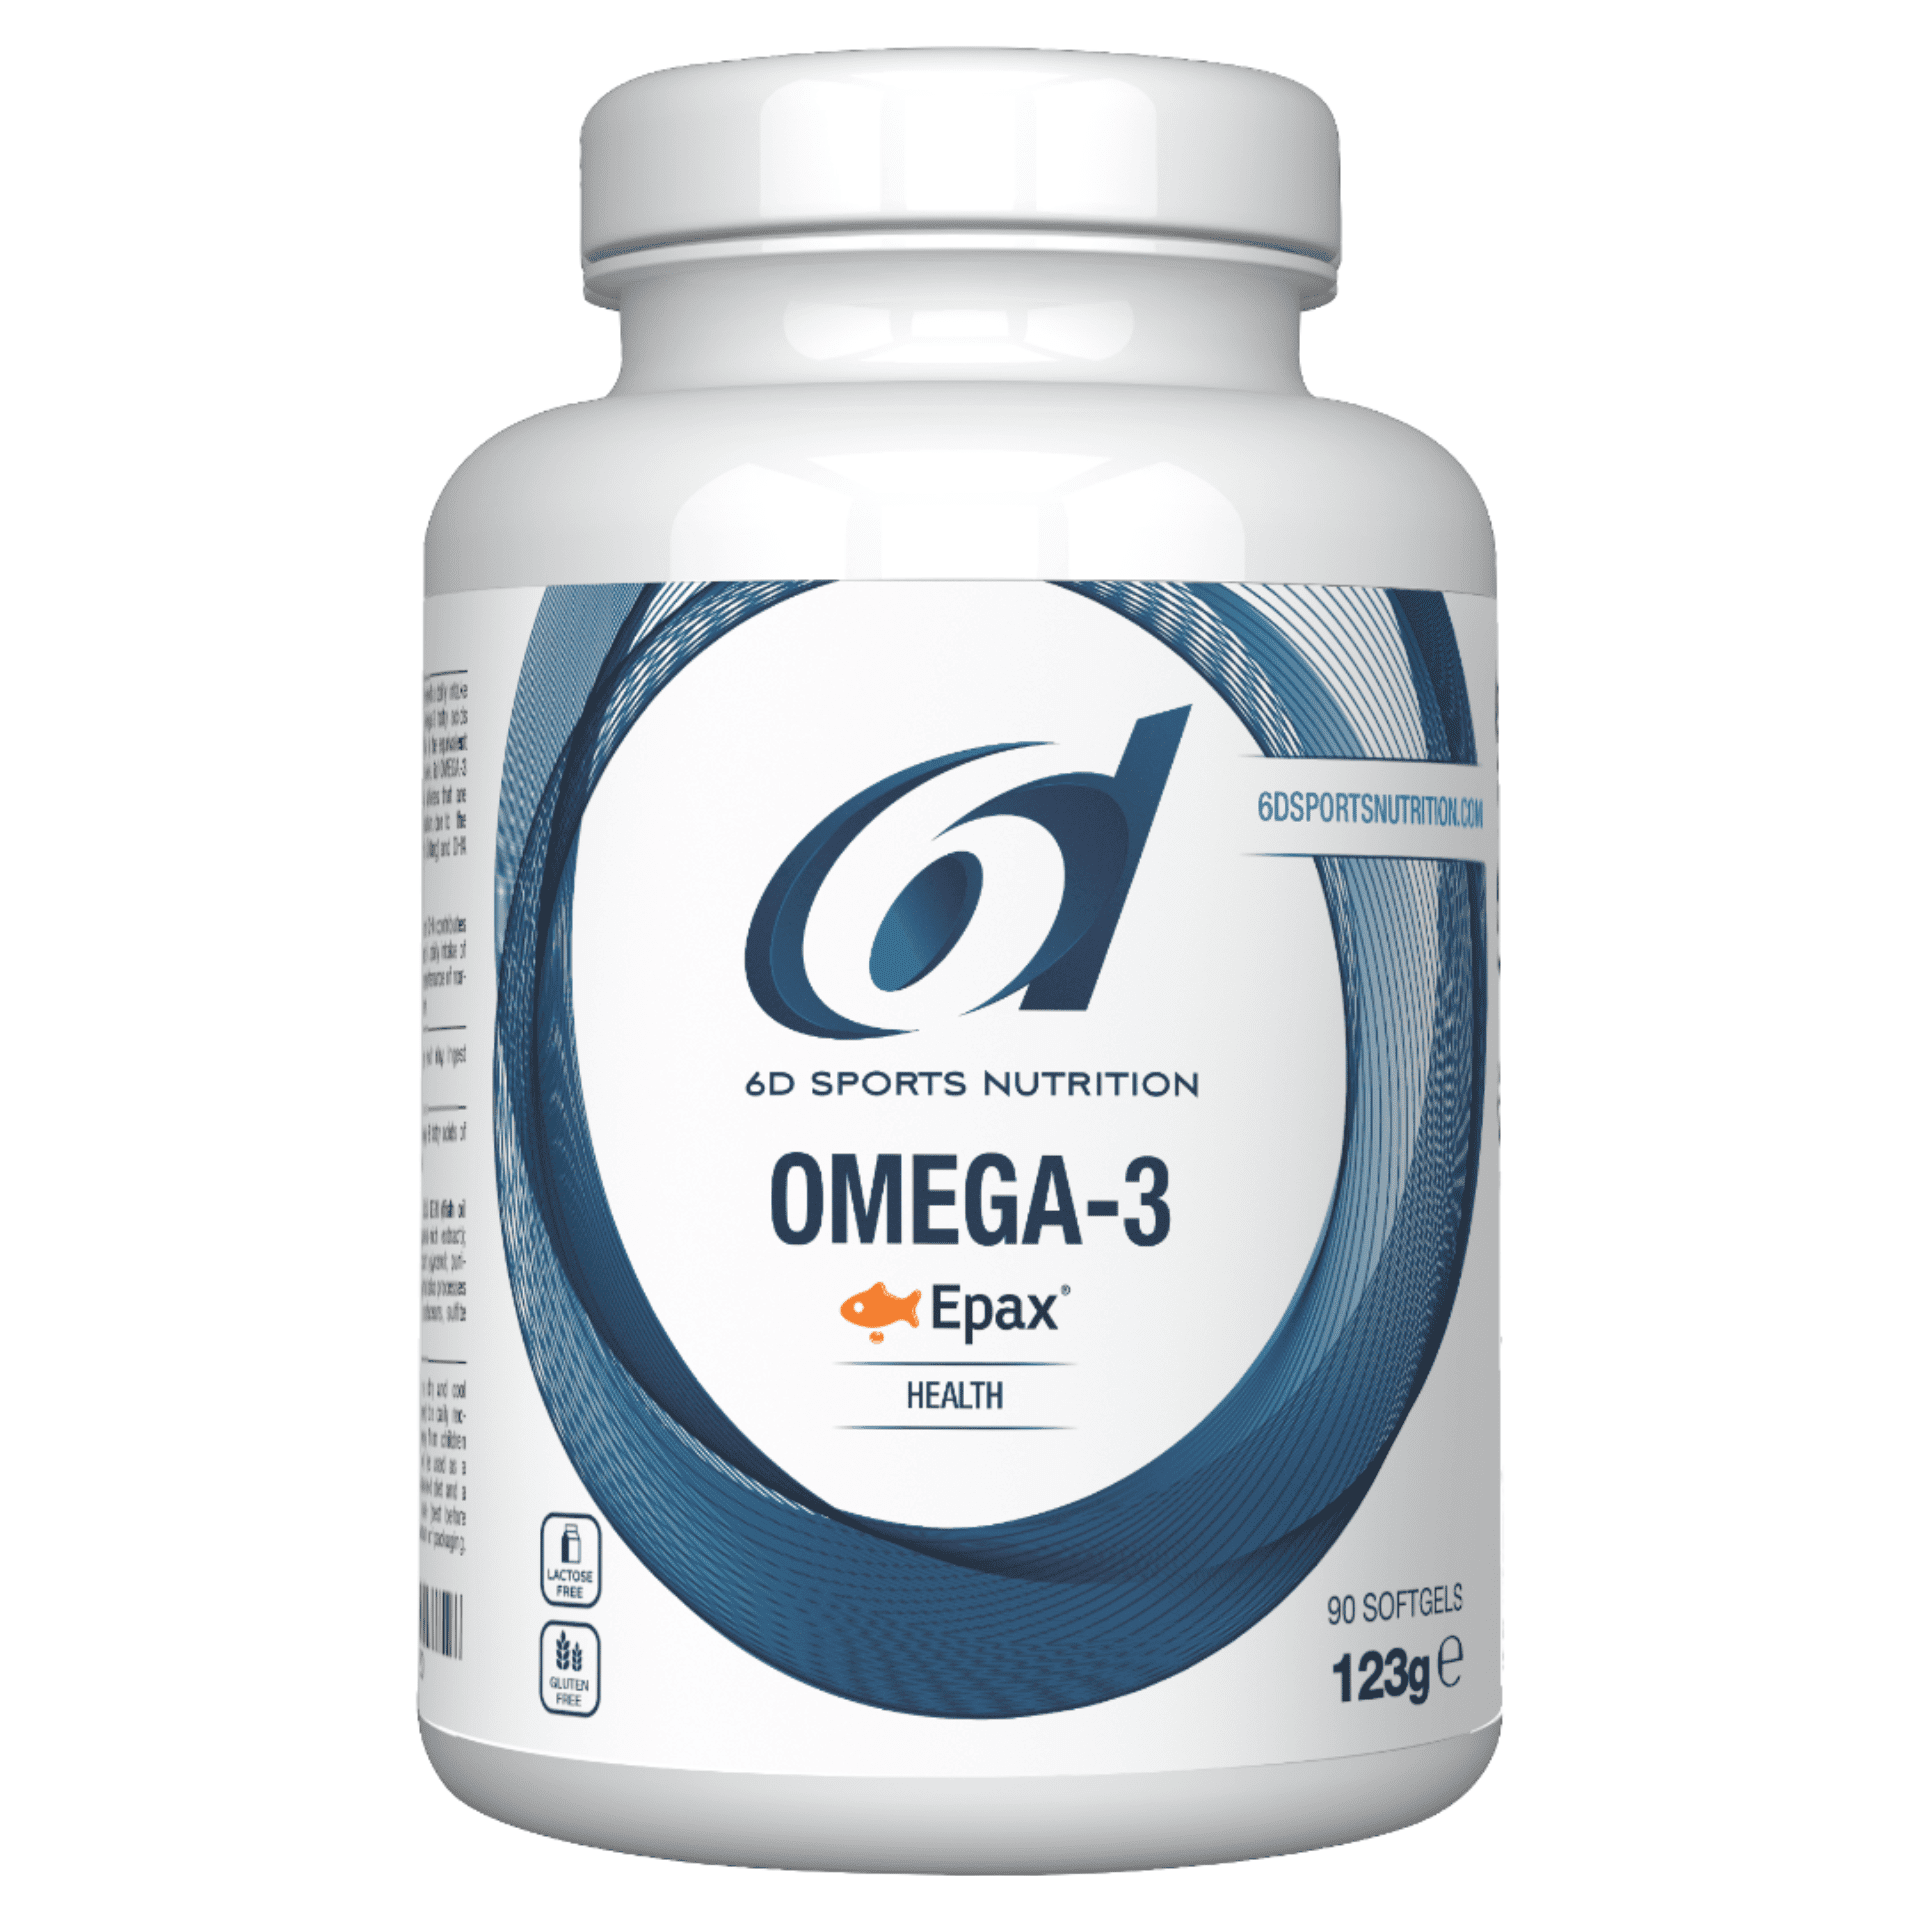 6d Sports Nutrition Omega-3 EPAX